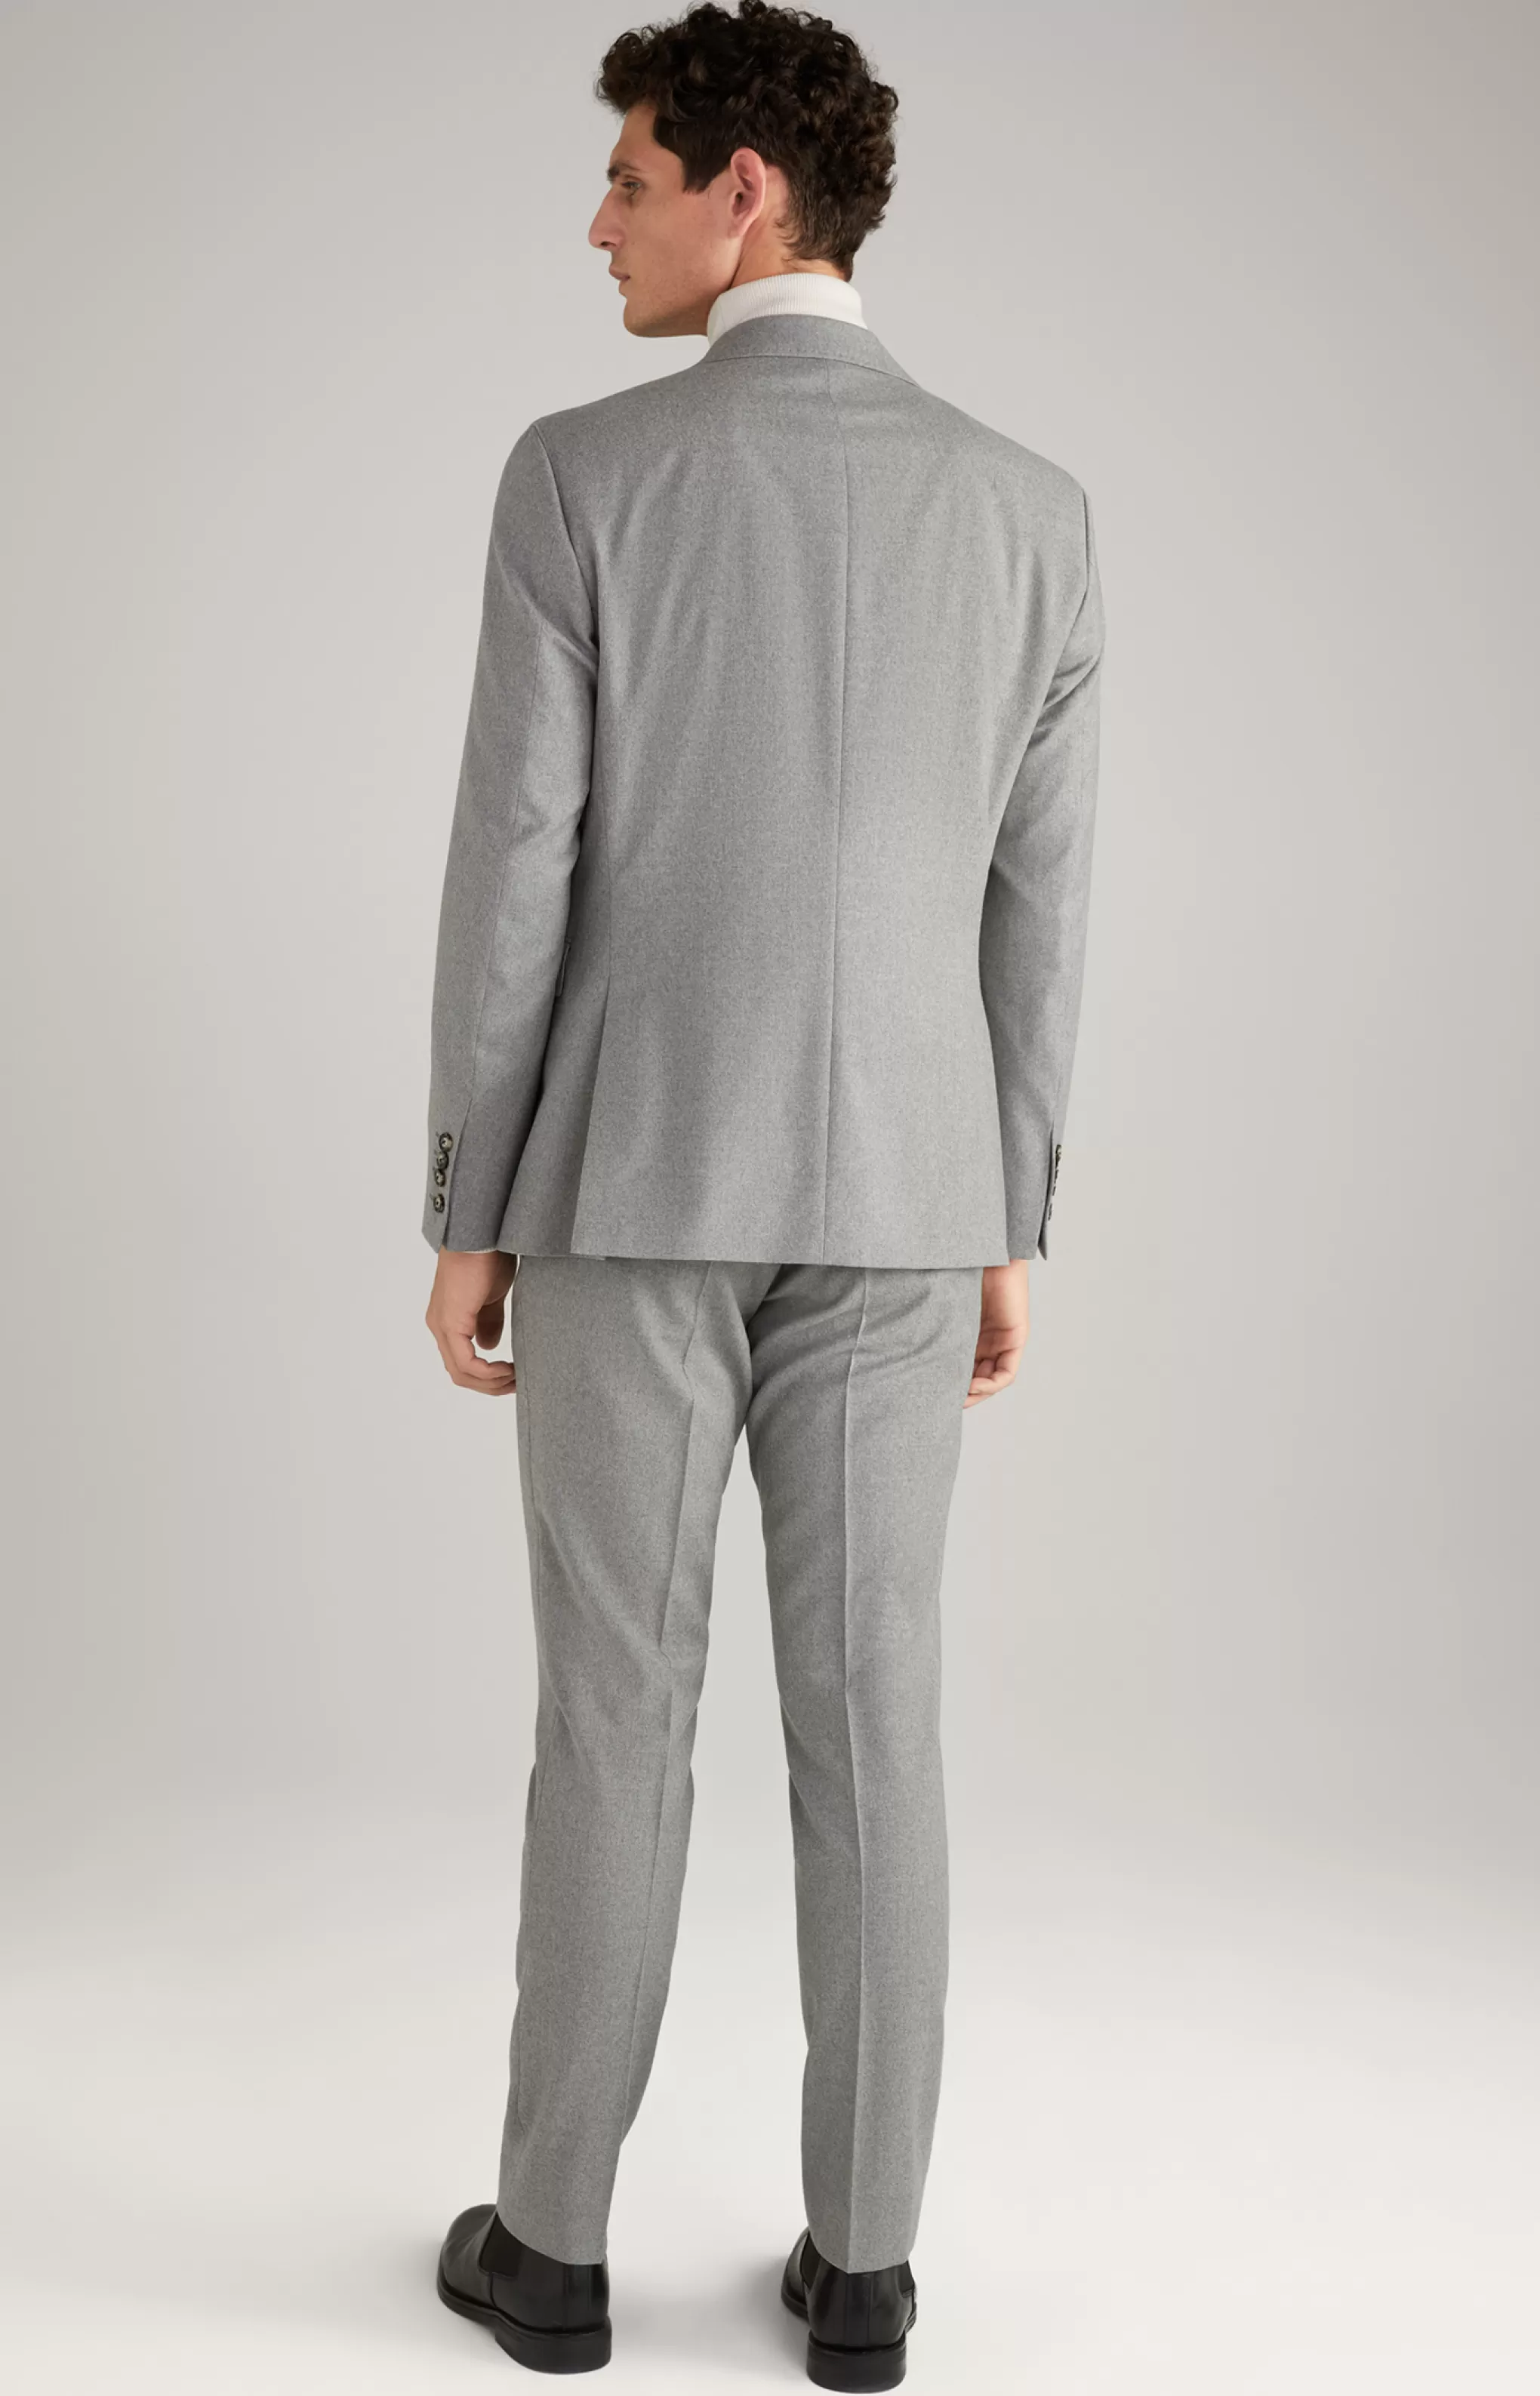 Suits | Clothing*JOOP Suits | Clothing Haspar-Bloom Suit in Flecked Grey